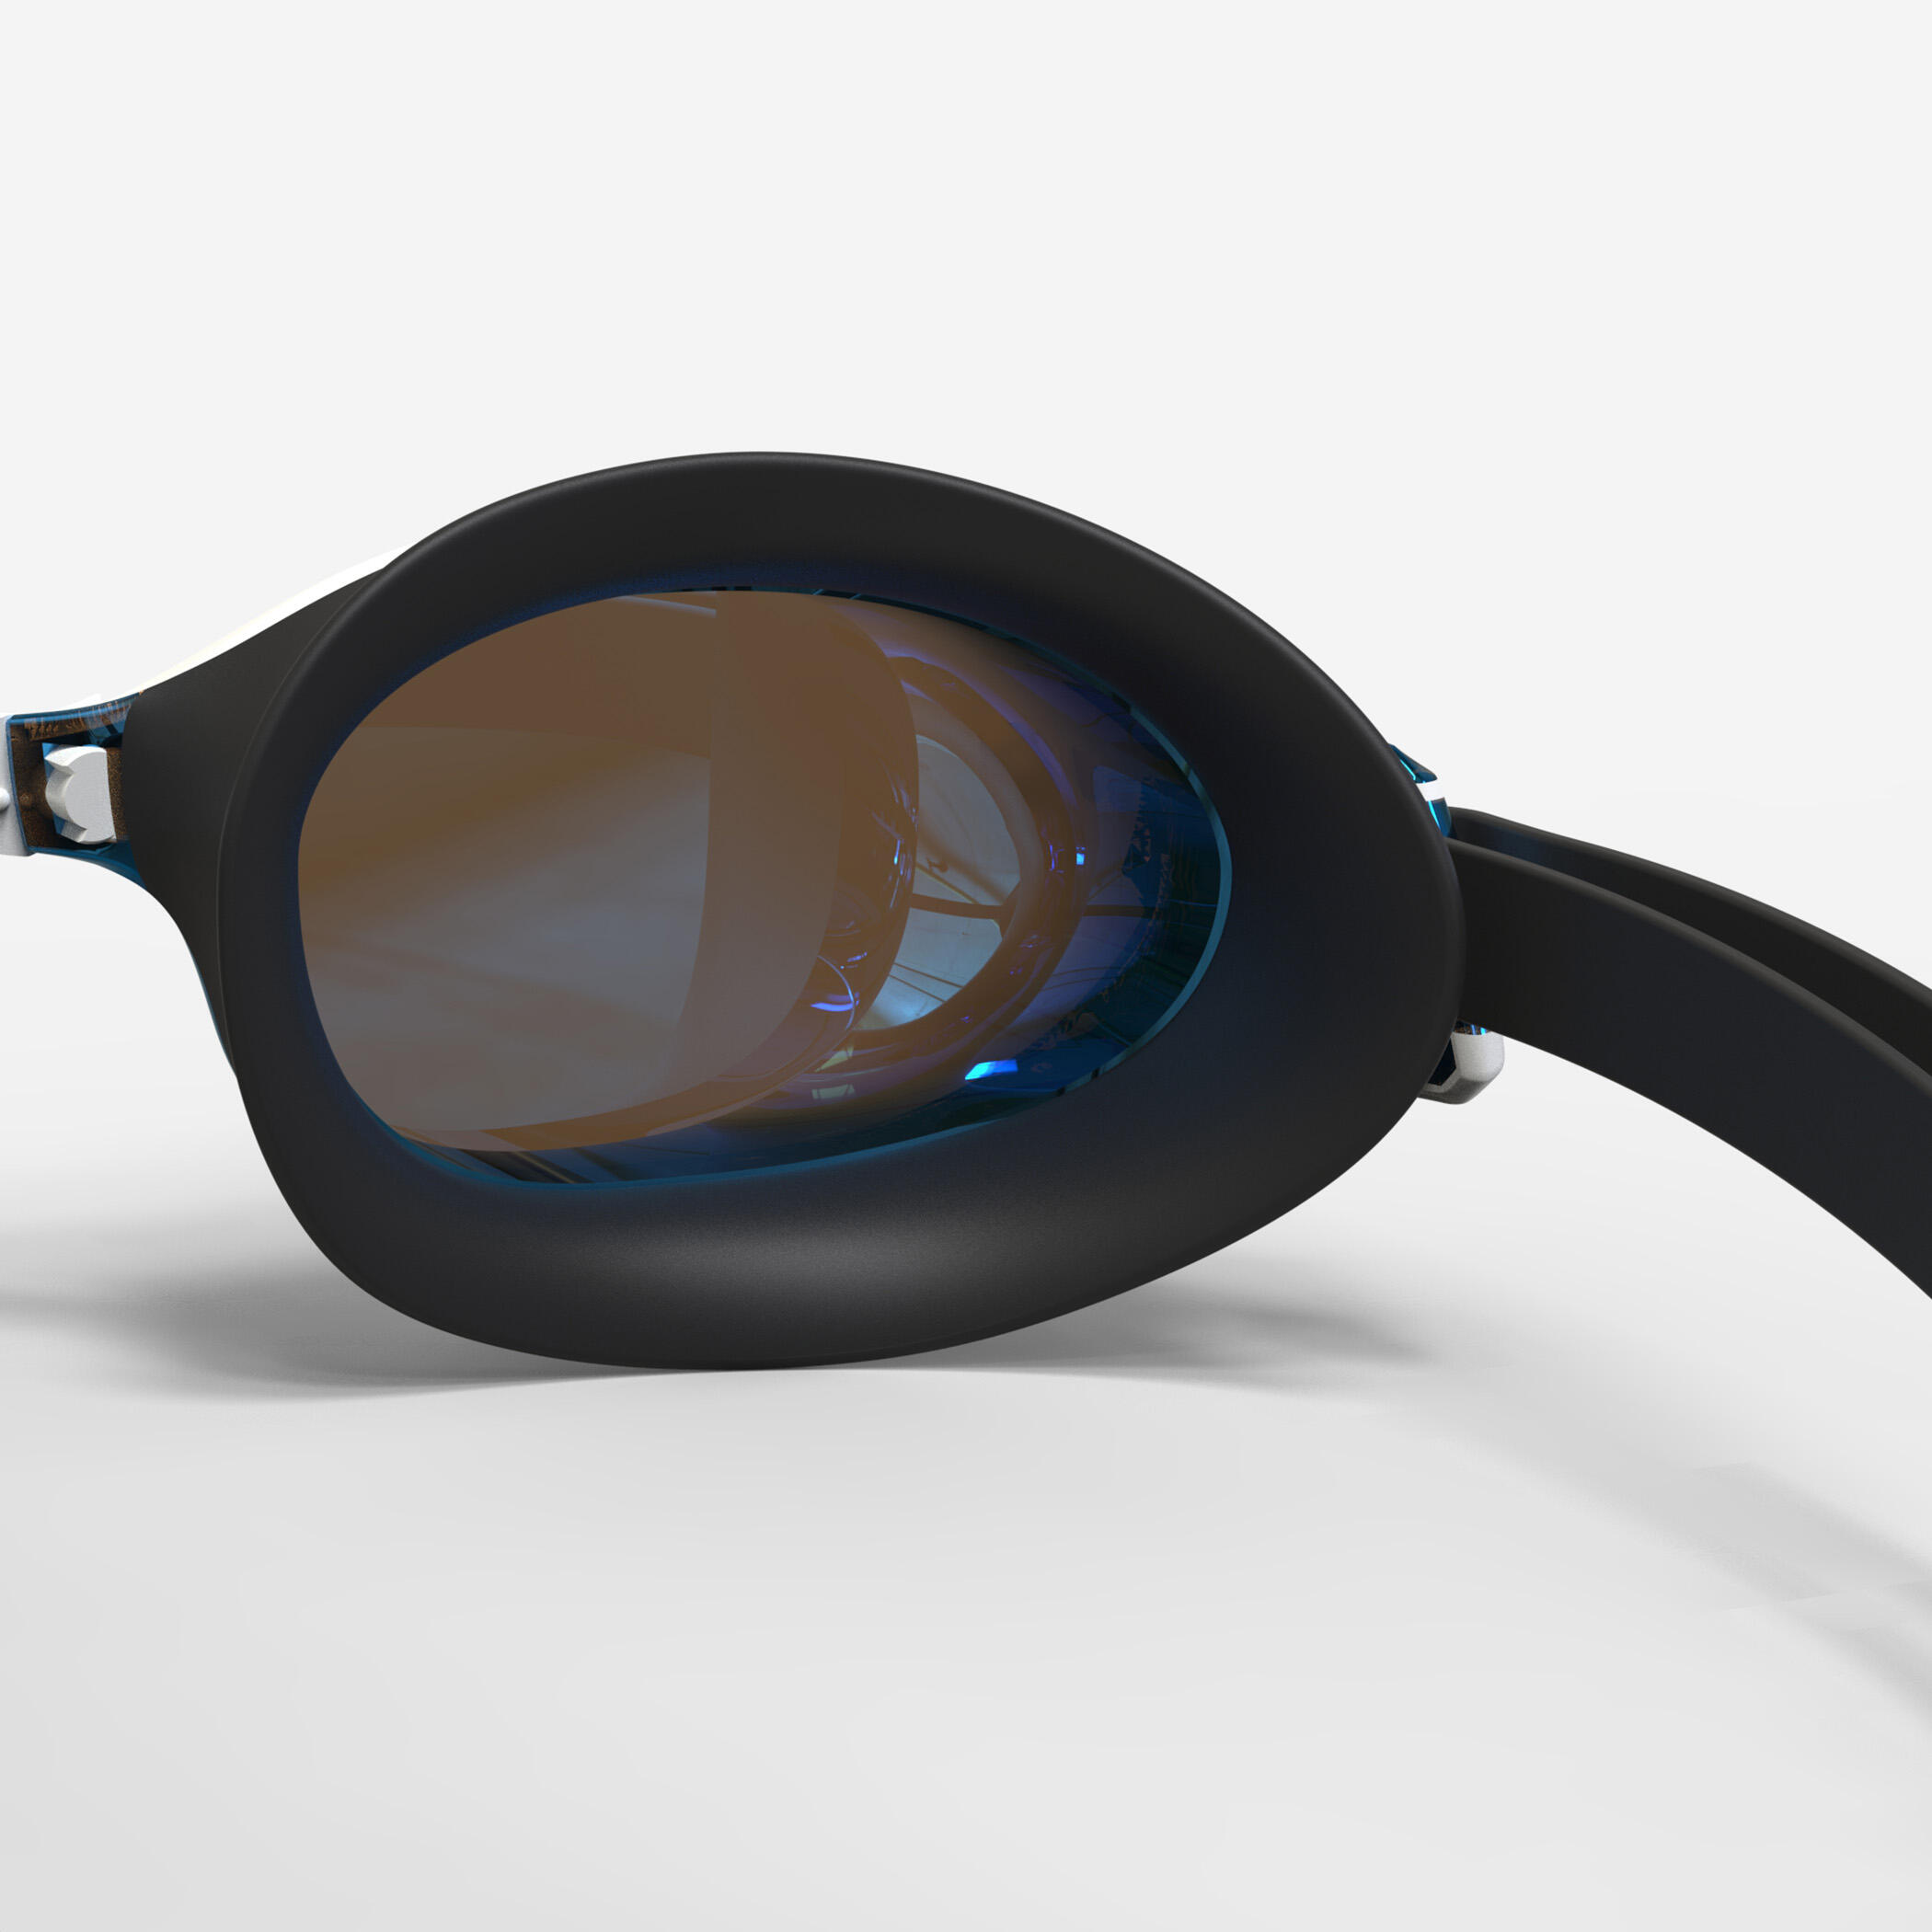 Swimming goggles BFIT - Mirrored lenses - One size - Black orange 5/5